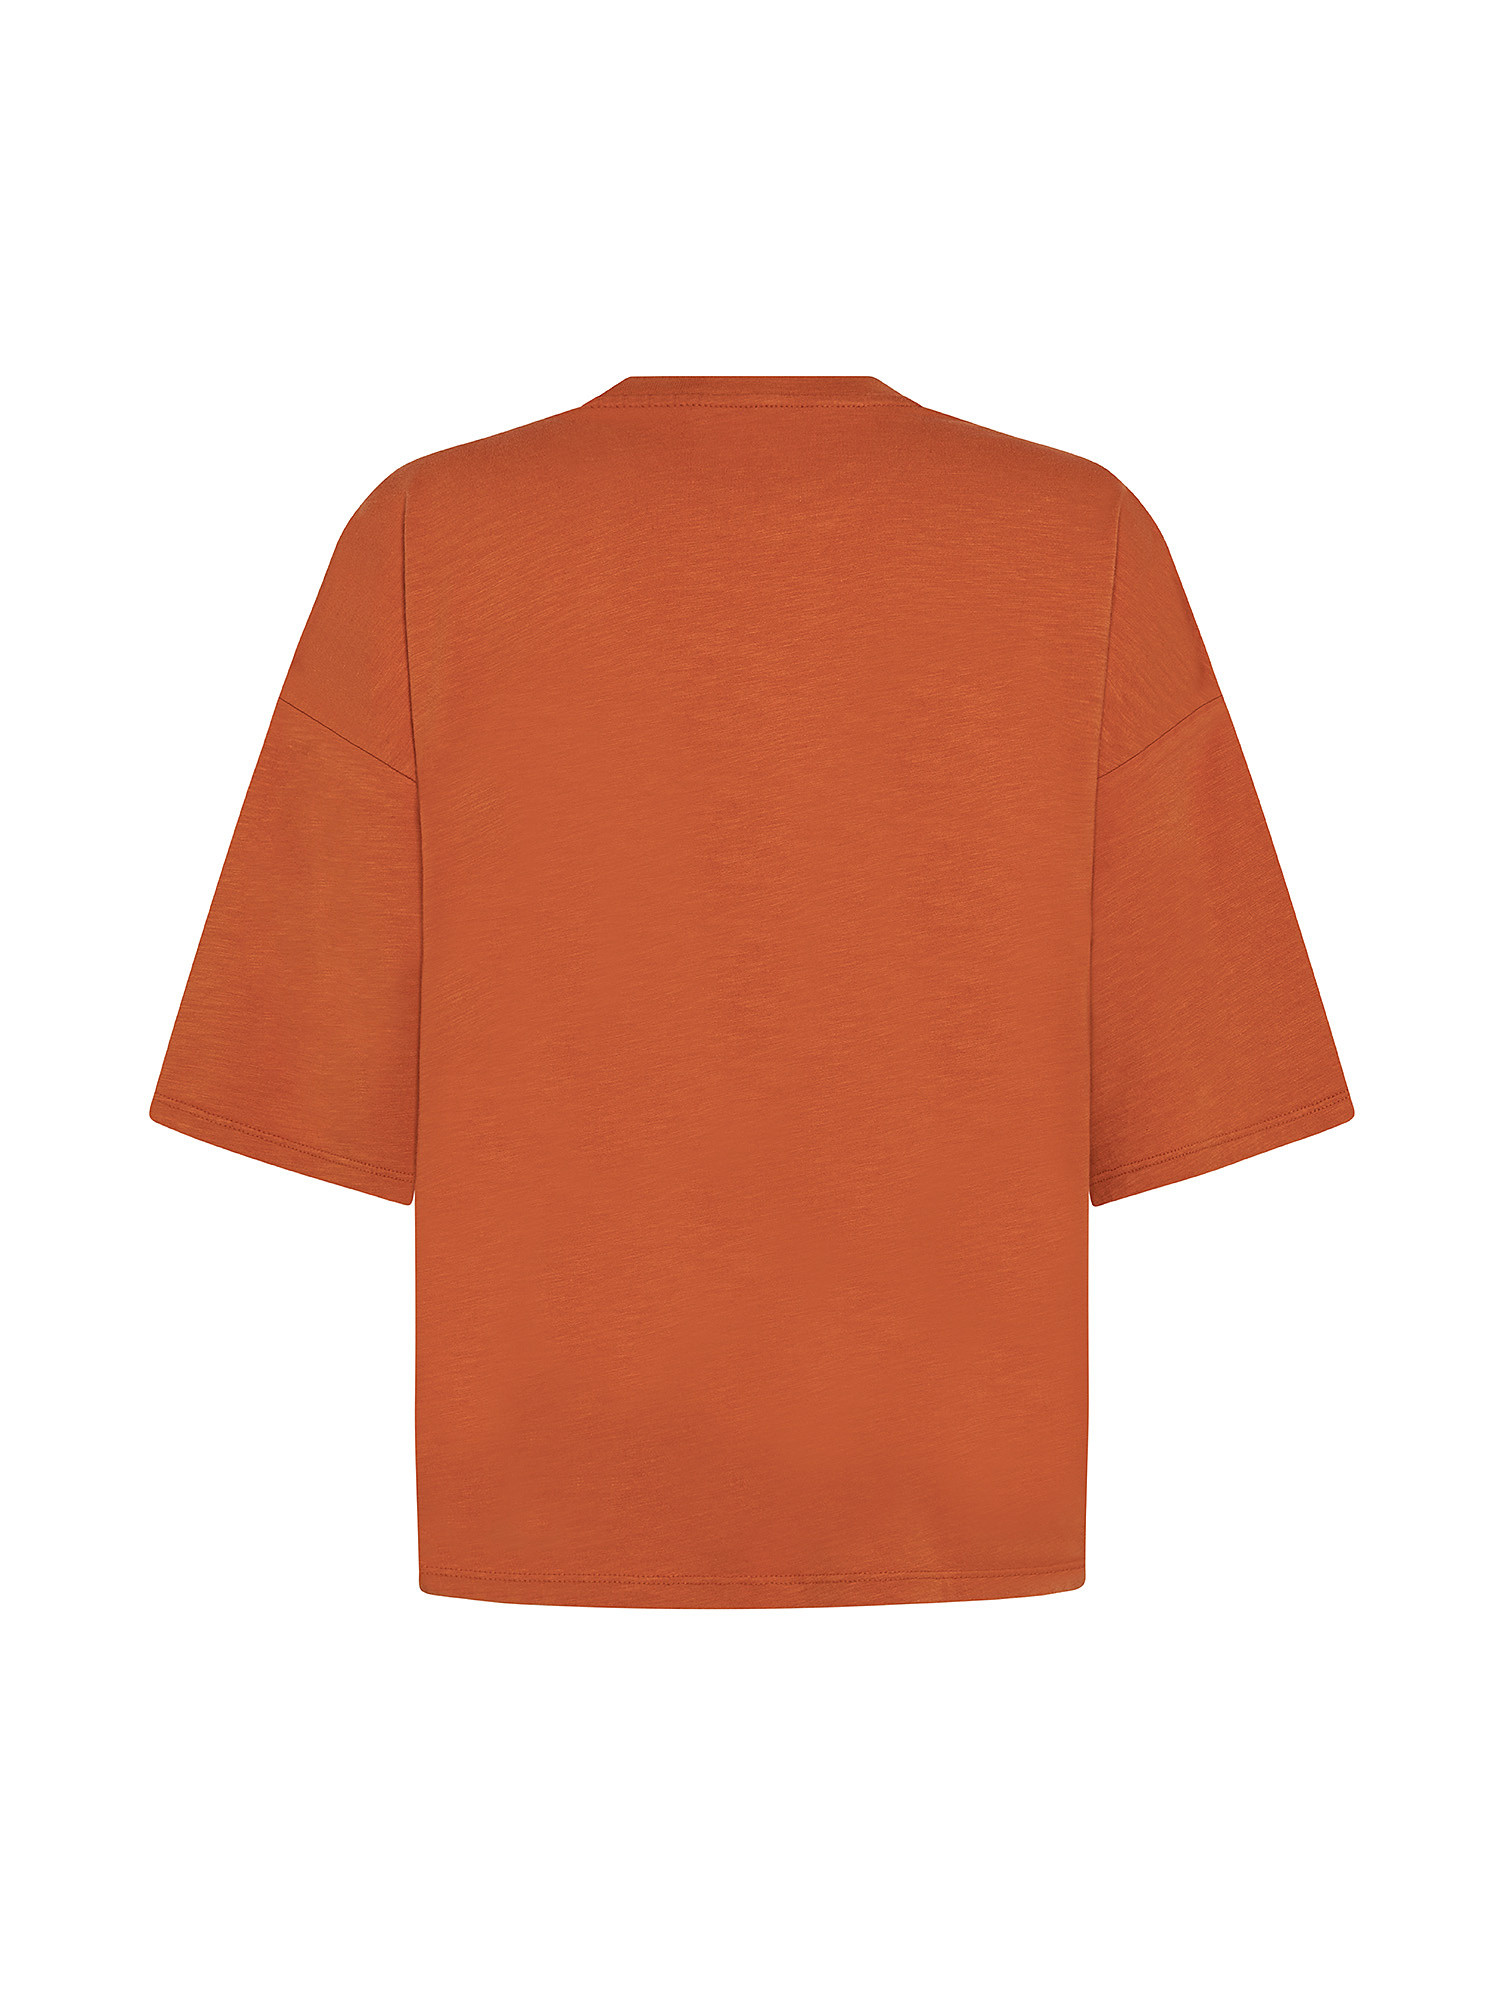 T-shirt Graphic Drapey Tee, Arancione, large image number 1